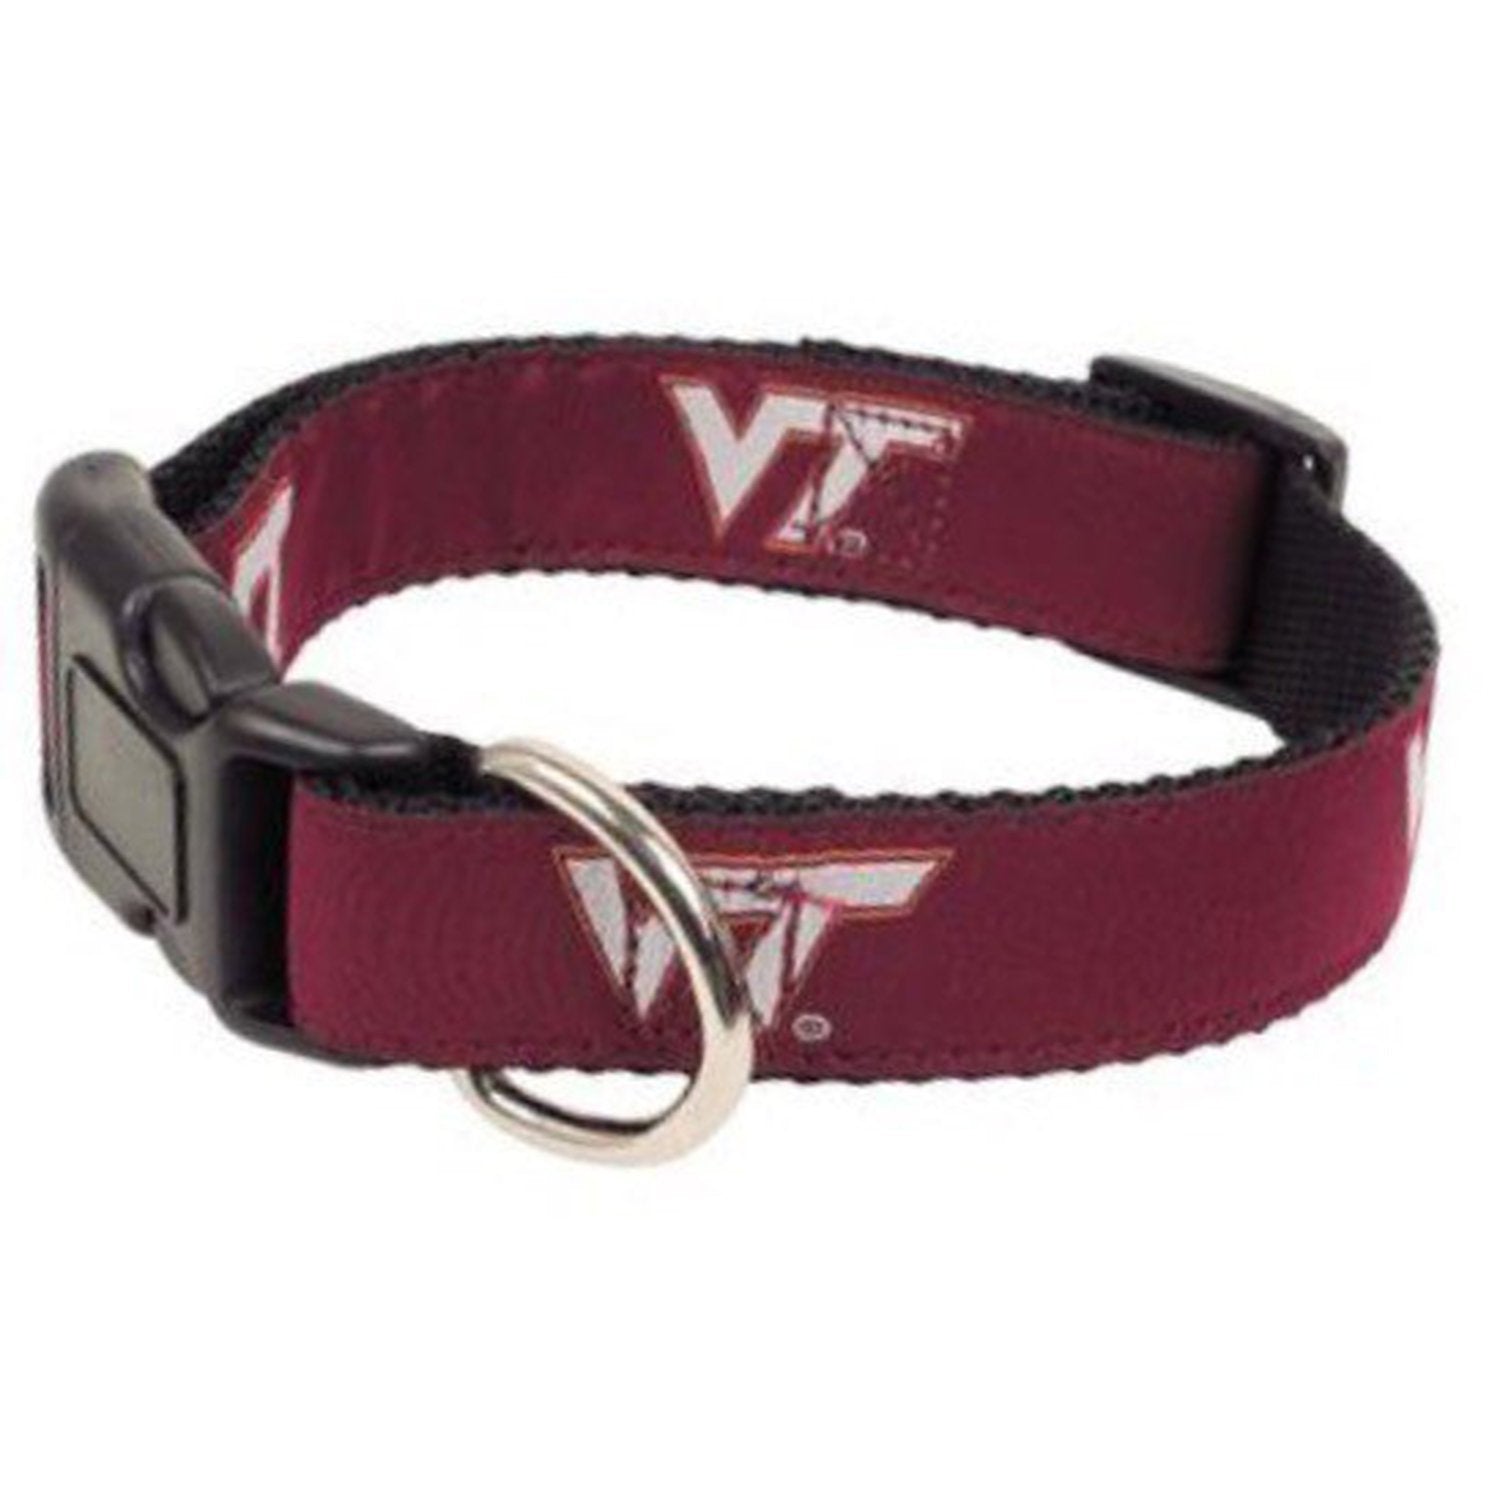 Virginia Tec Dog Collar